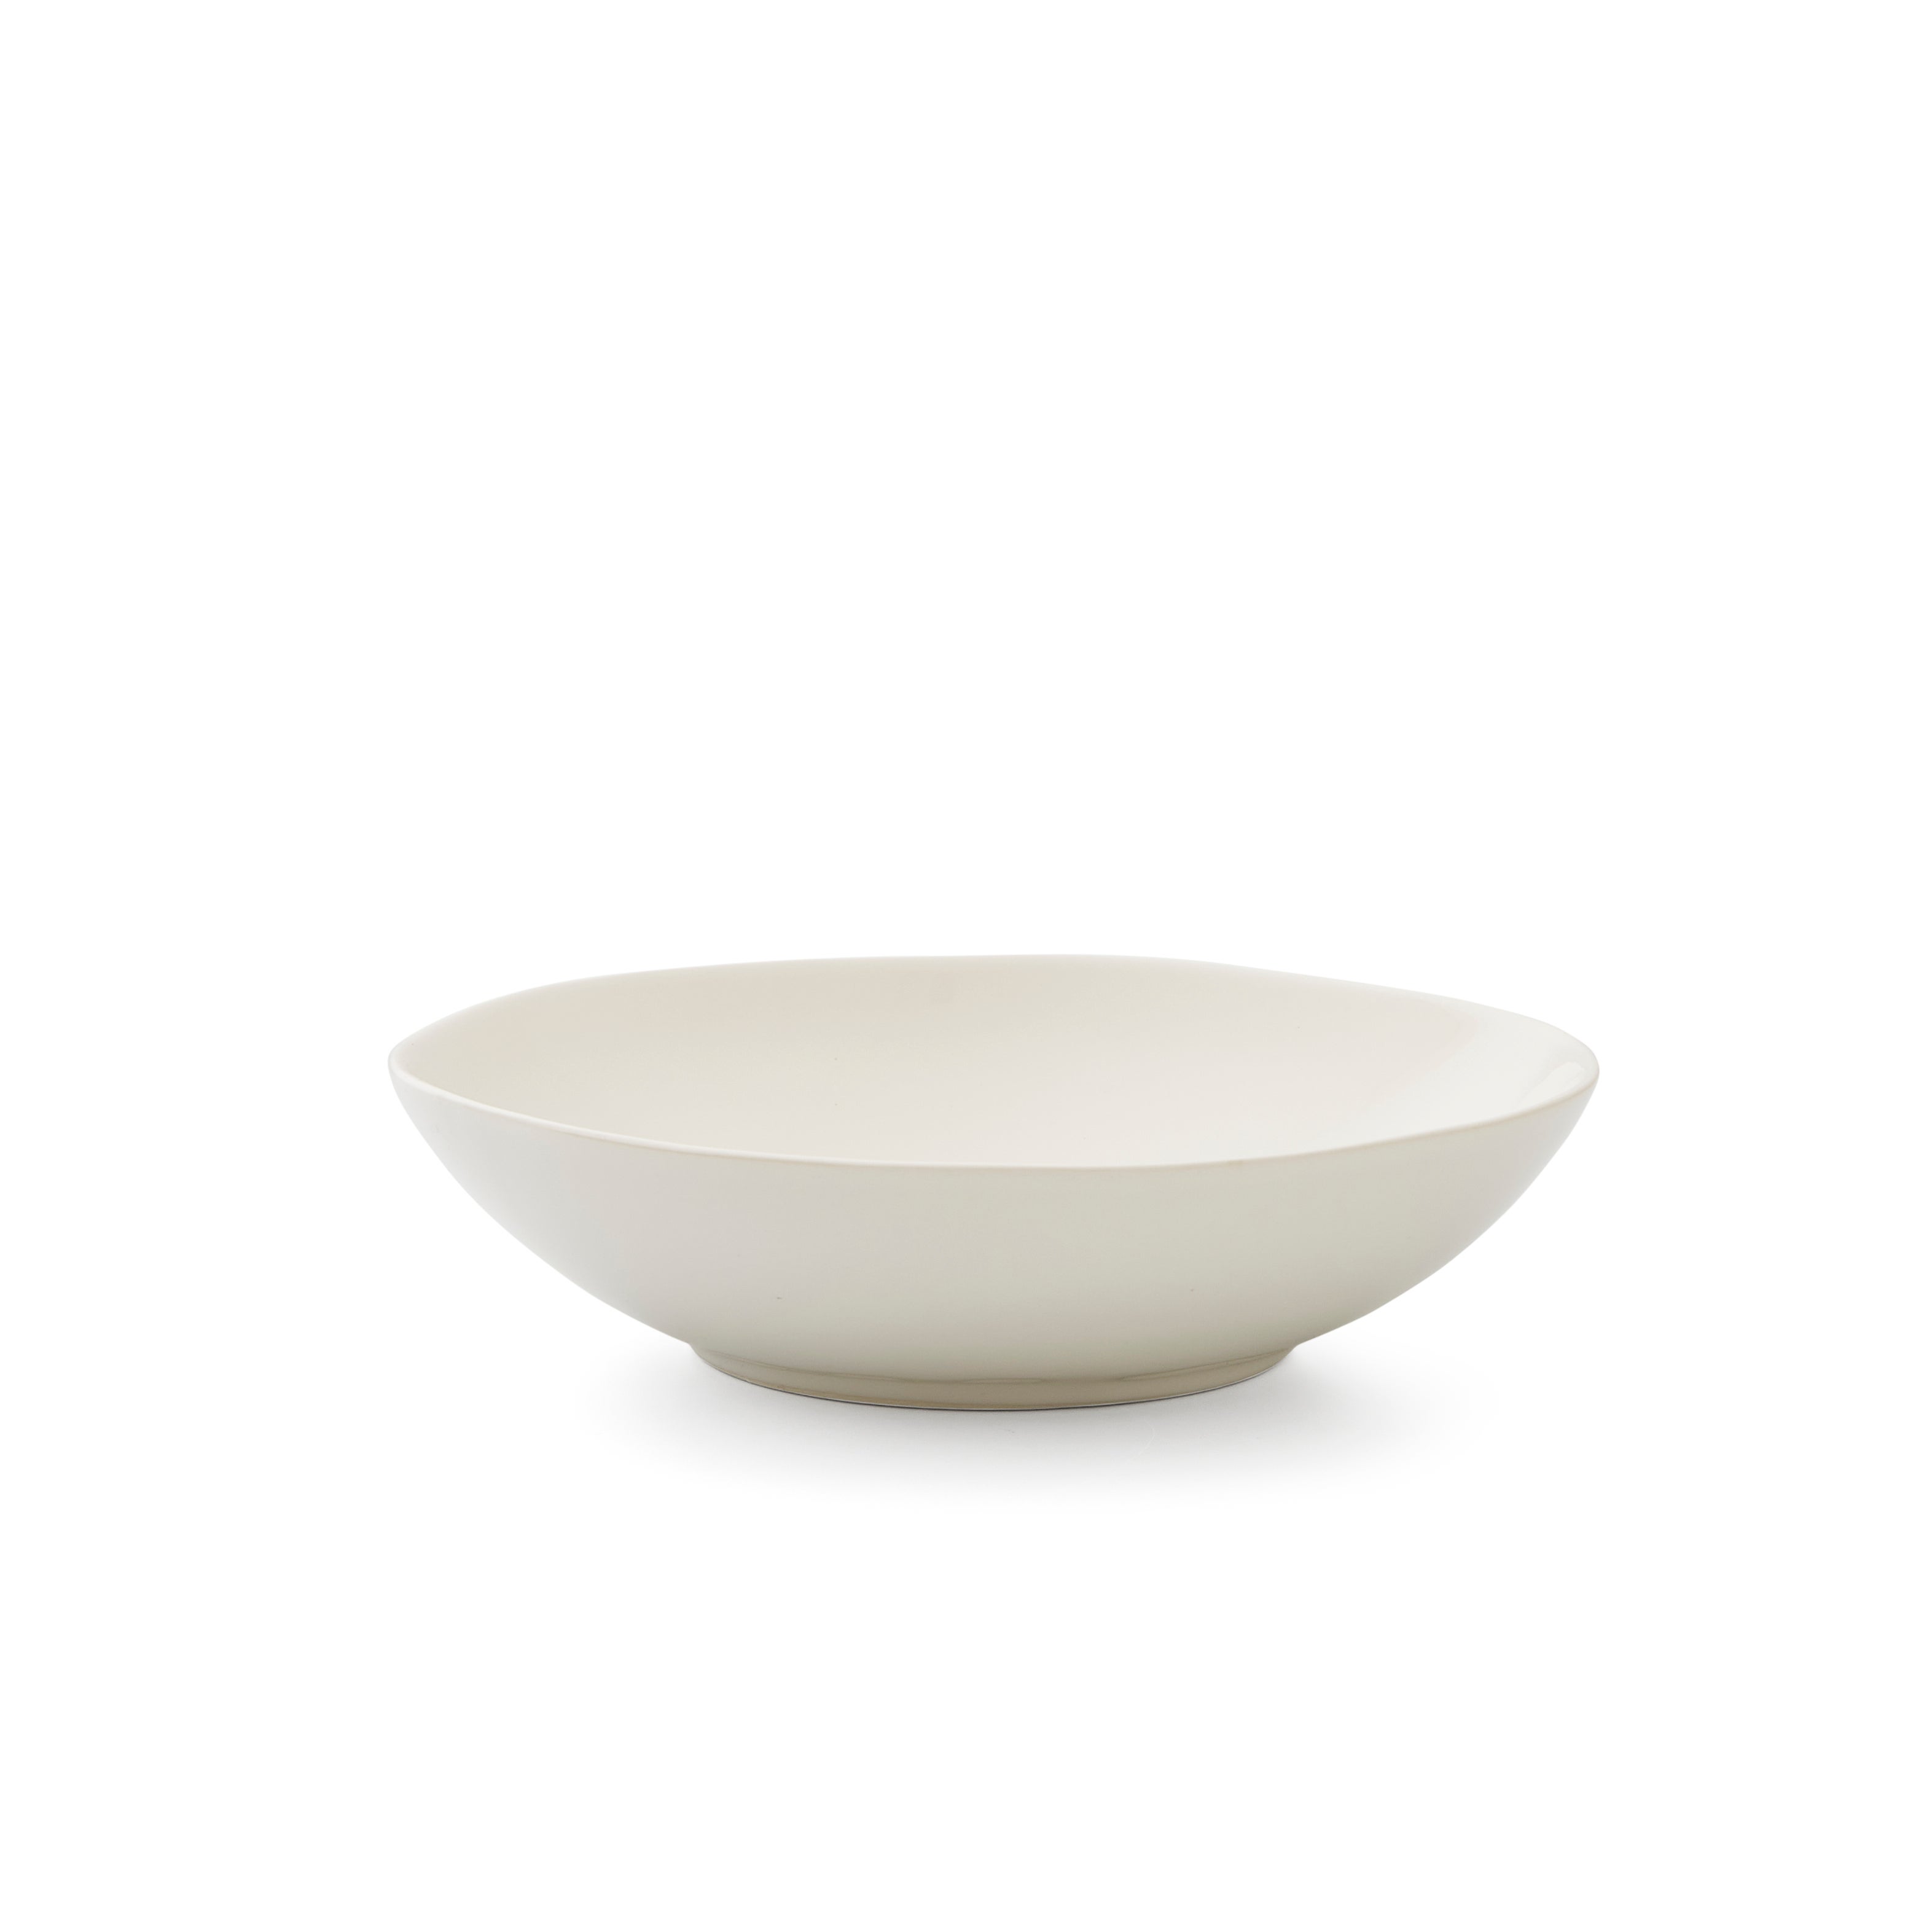 Sophie Conran For Portmeirion Set Of 4 Pasta Bowls White